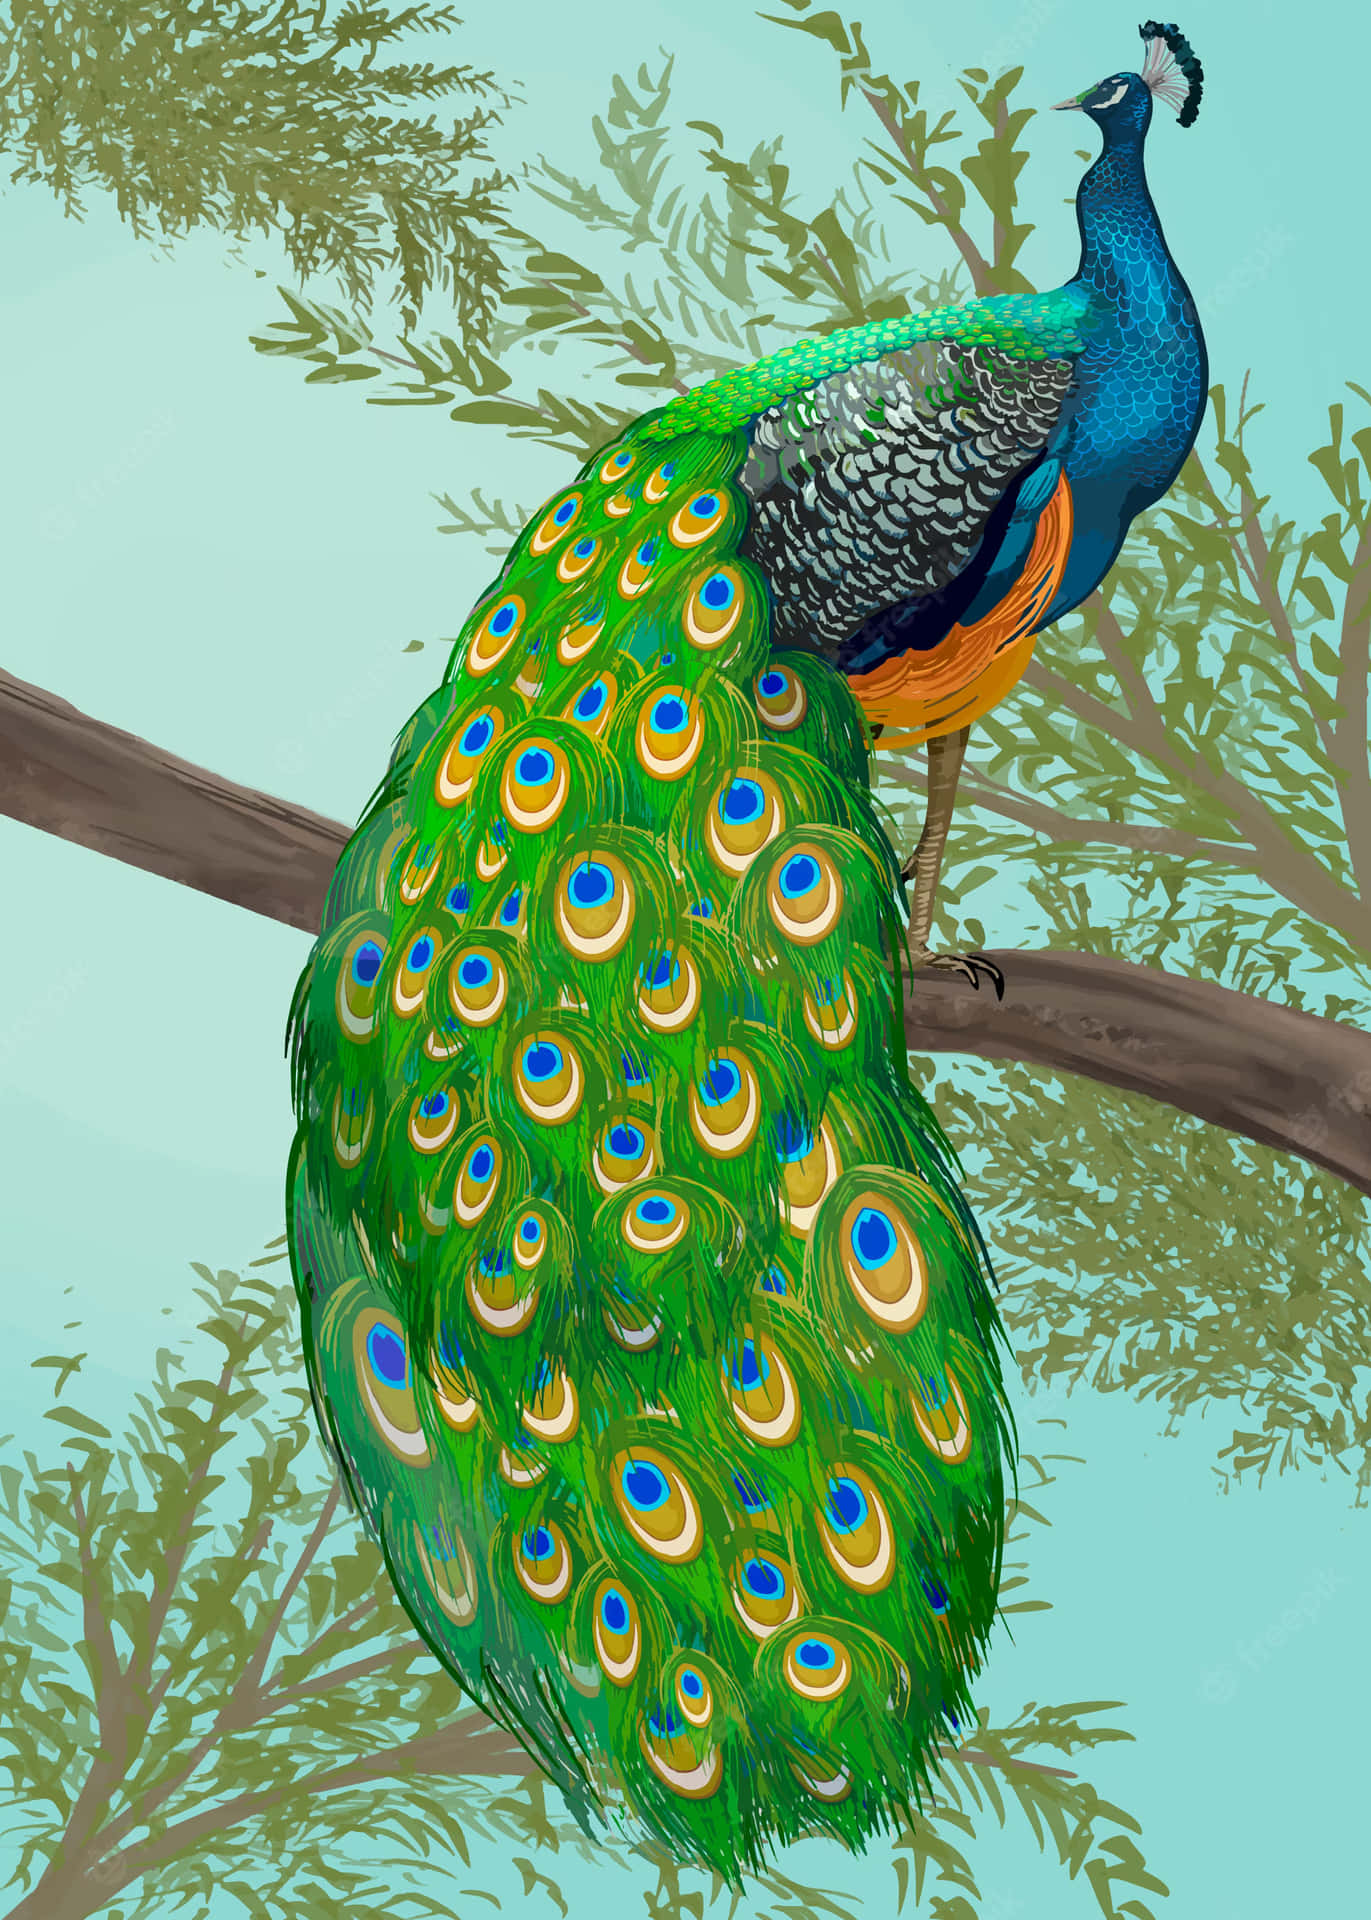 Vibrant Peacock Showing Flamboyant Plumage